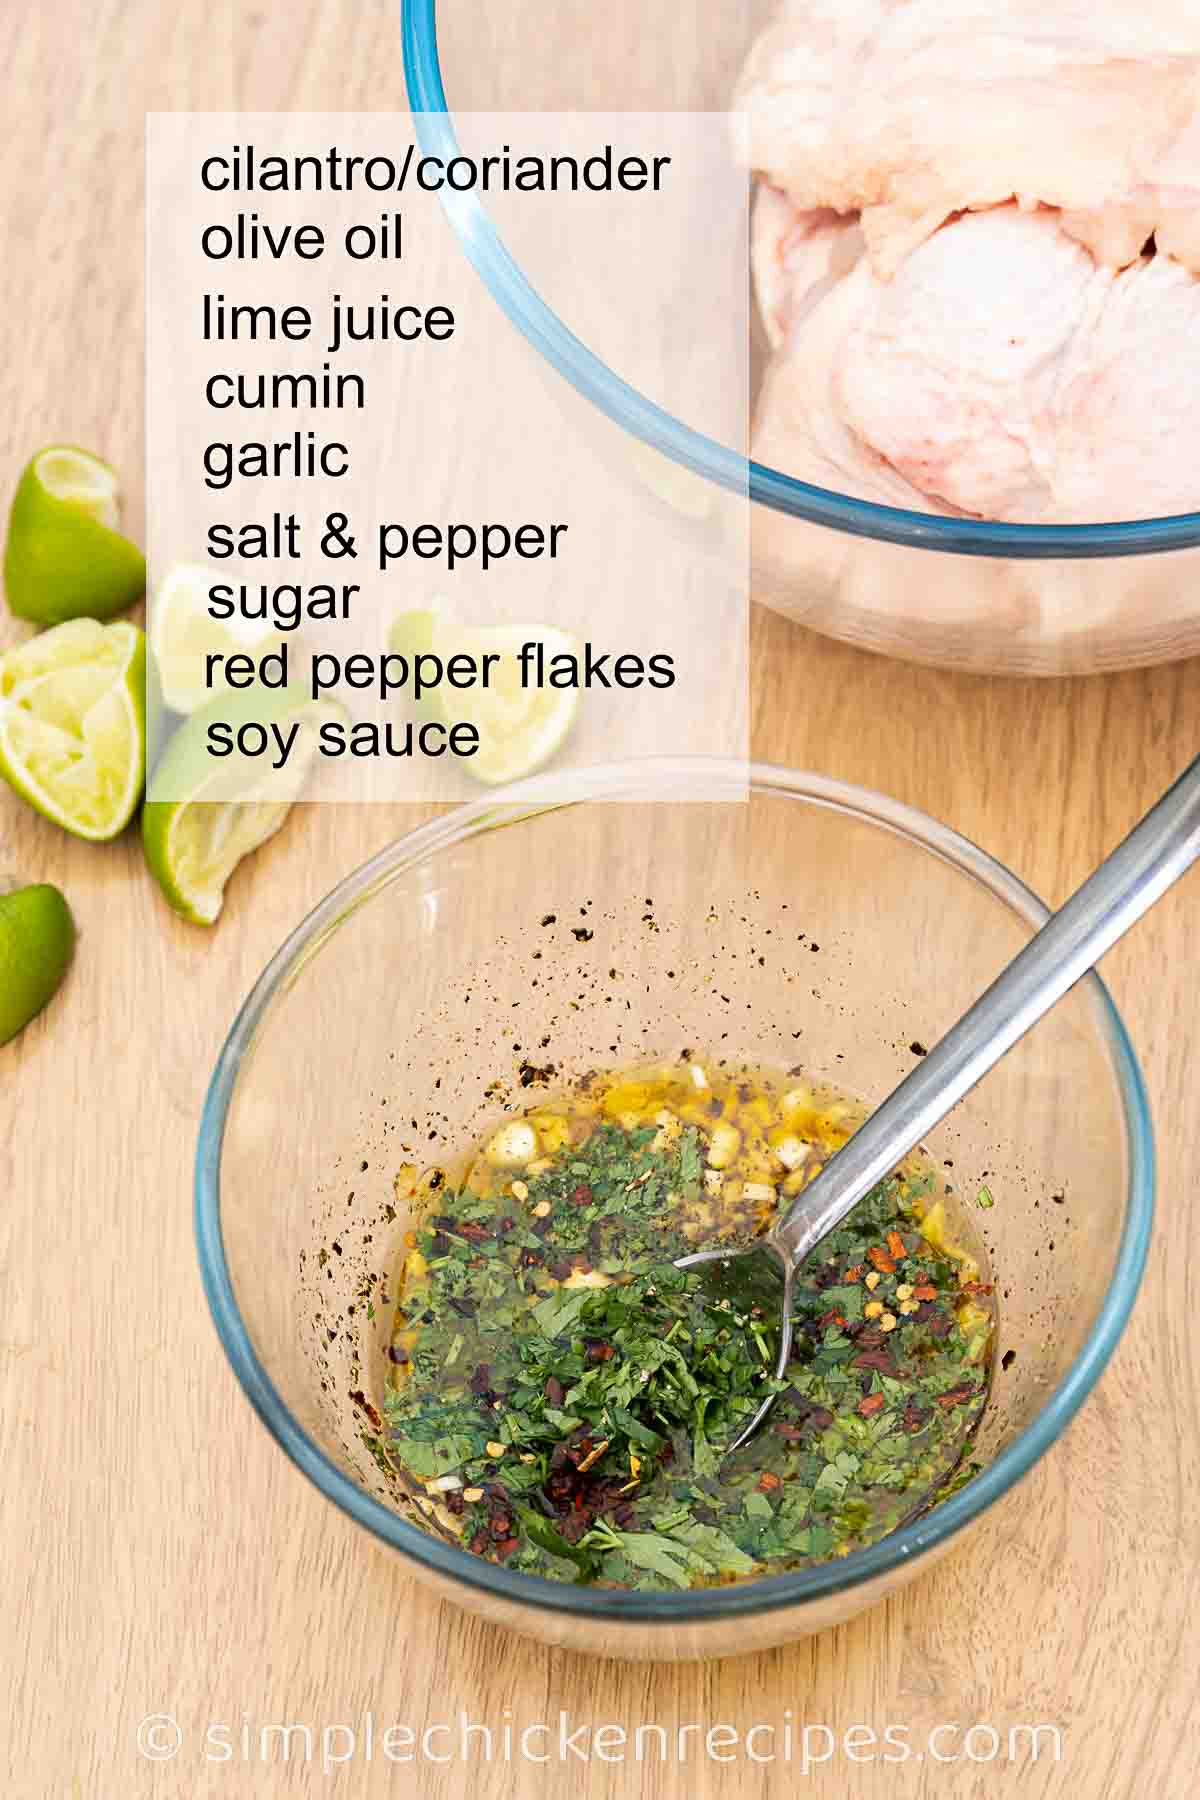 cilantro / coriander marinade: garlic, lime juice, cumin, sugar, red pepper flakes